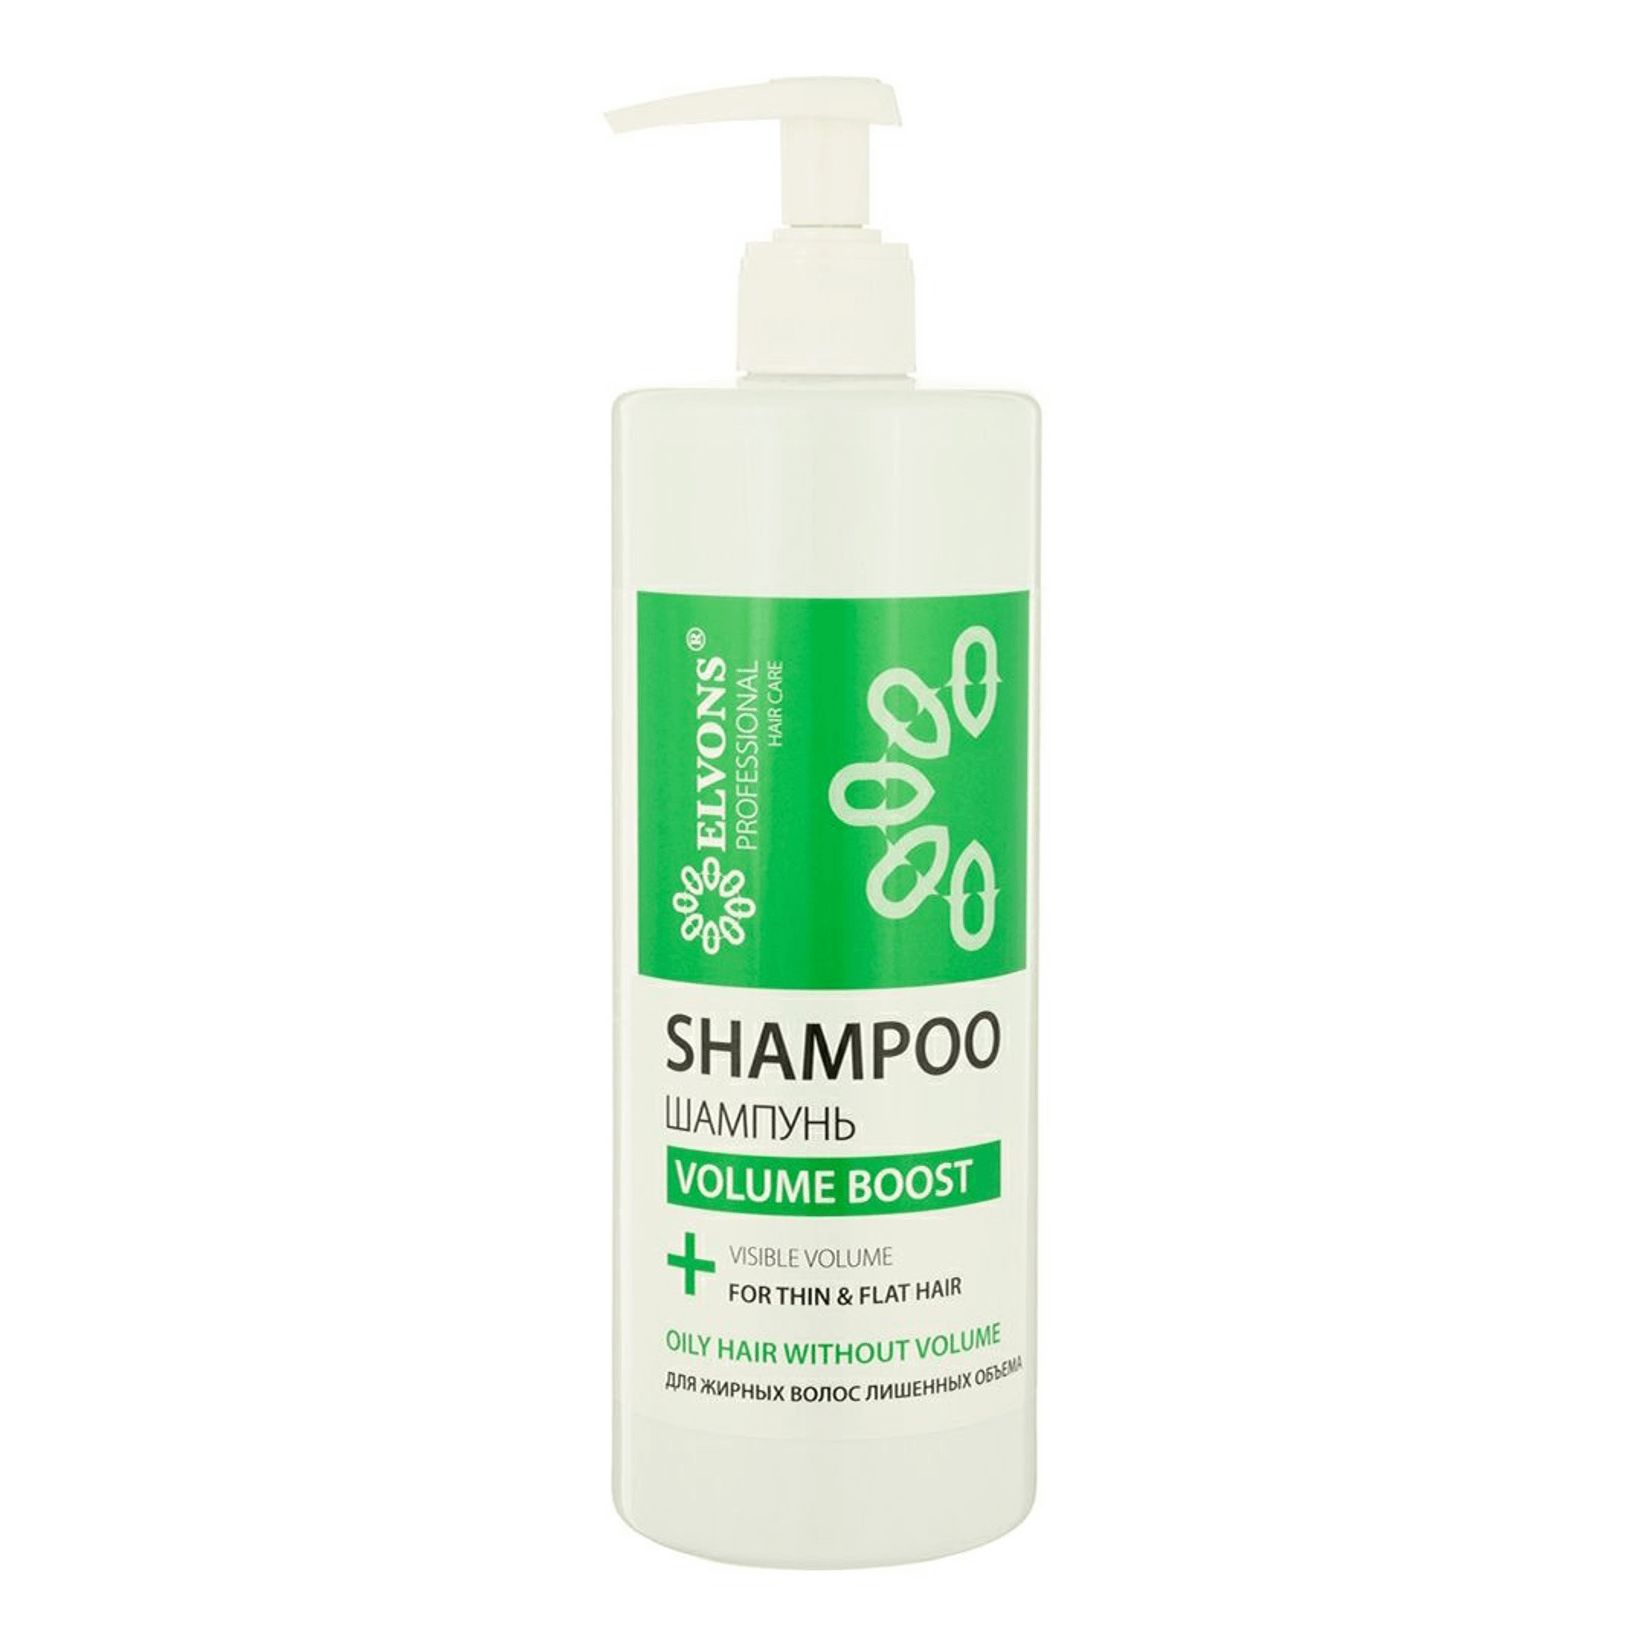 Лишай волос шампунь. Shampoo Volume Boost elvons. Elvons Olive body 250 крем отзывы.